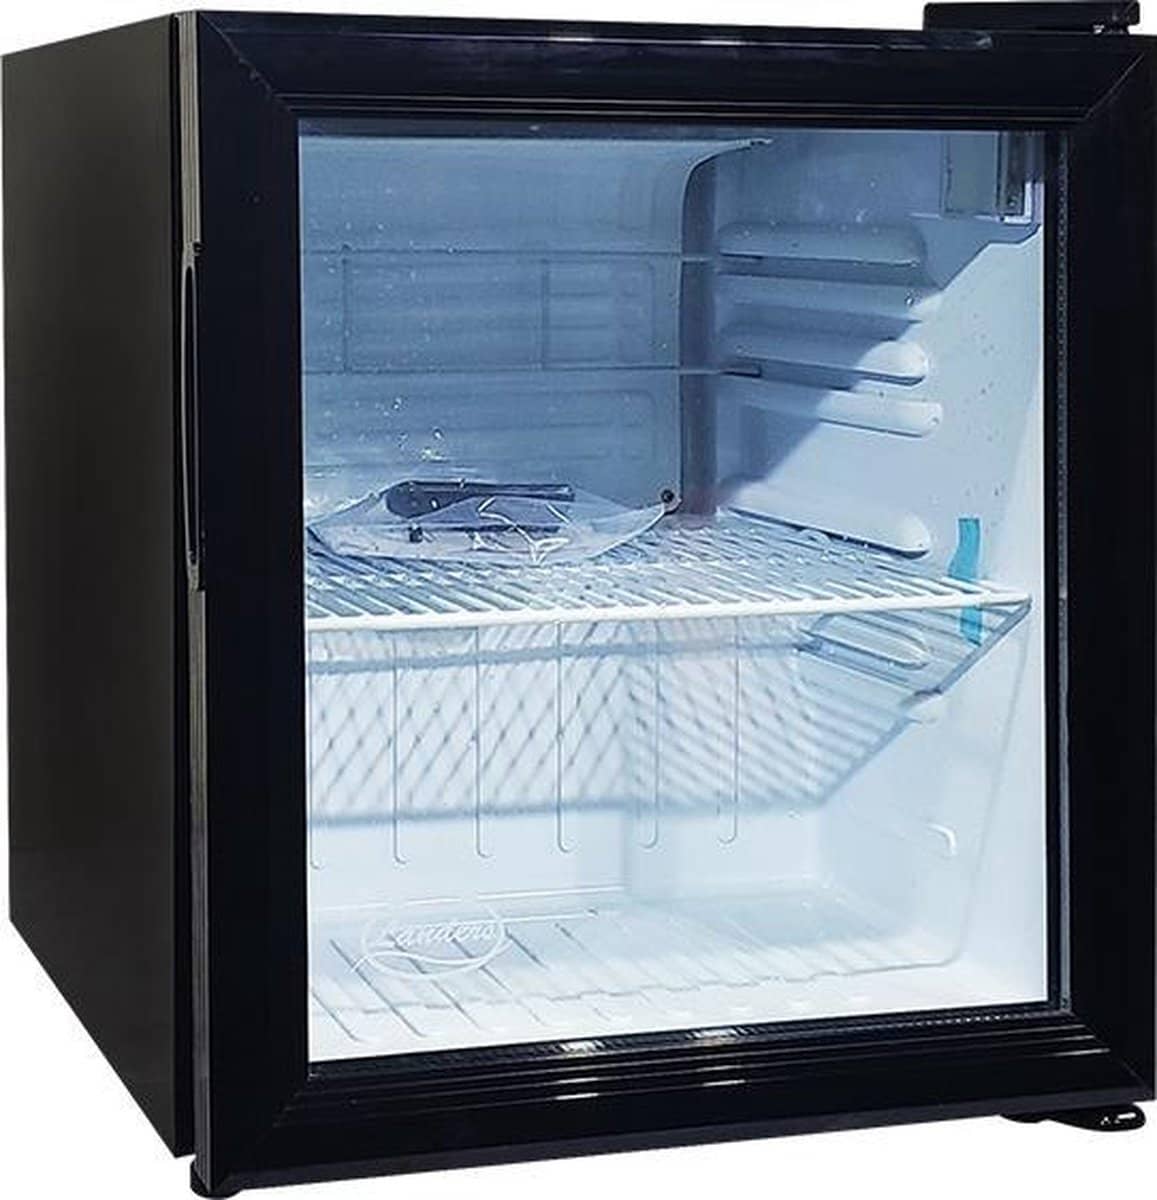 VDT minibar 52 liter – koelkast – Horeca. Het serieuze werk